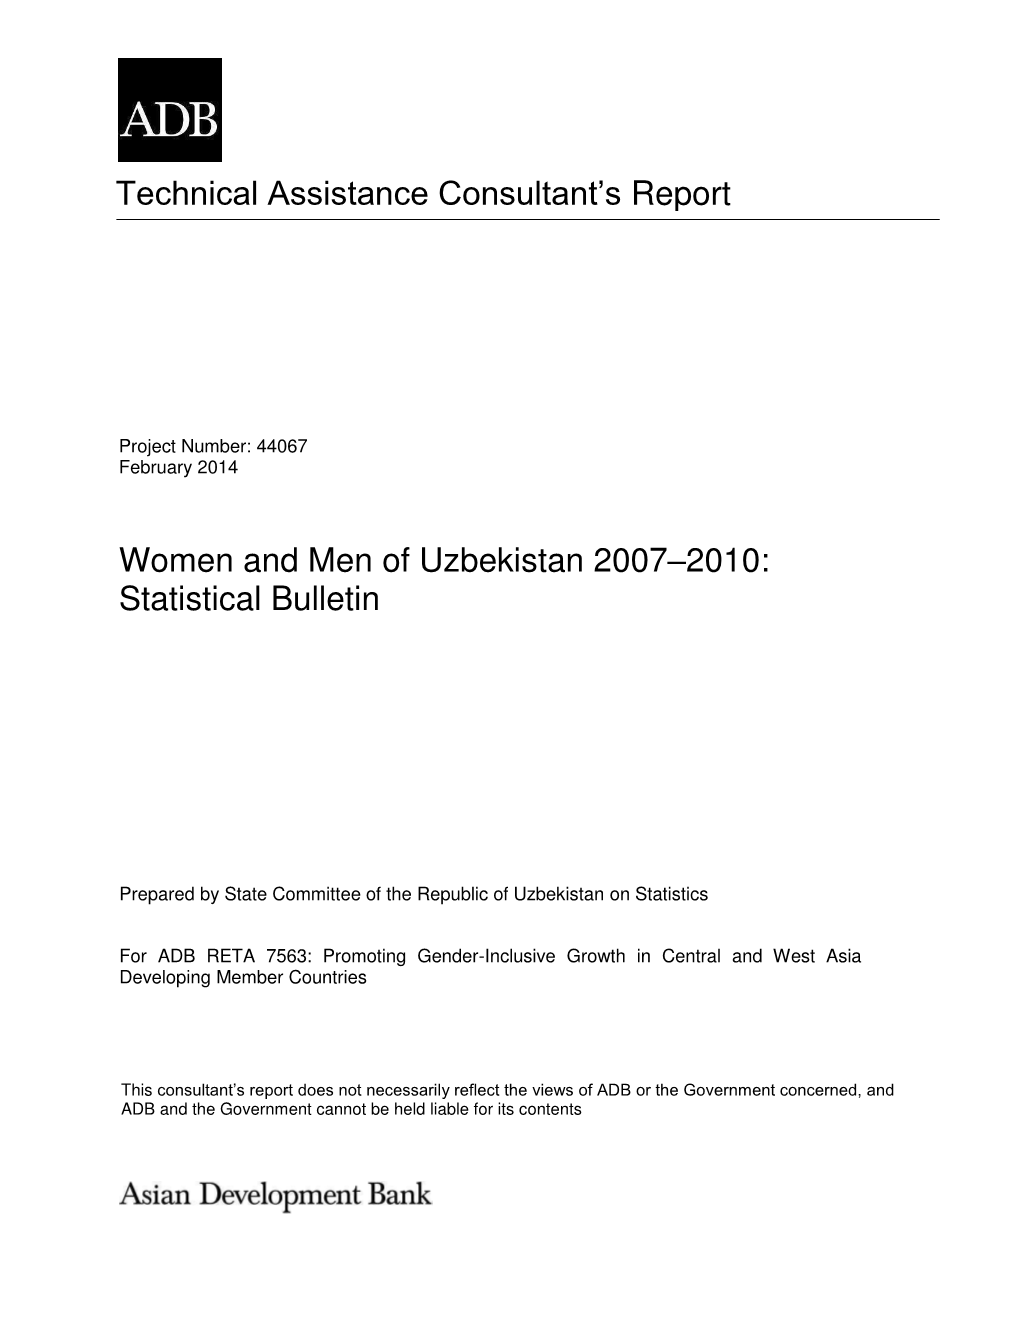 Women and Men of Uzbekistan 2007–2010: Statistical Bulletin